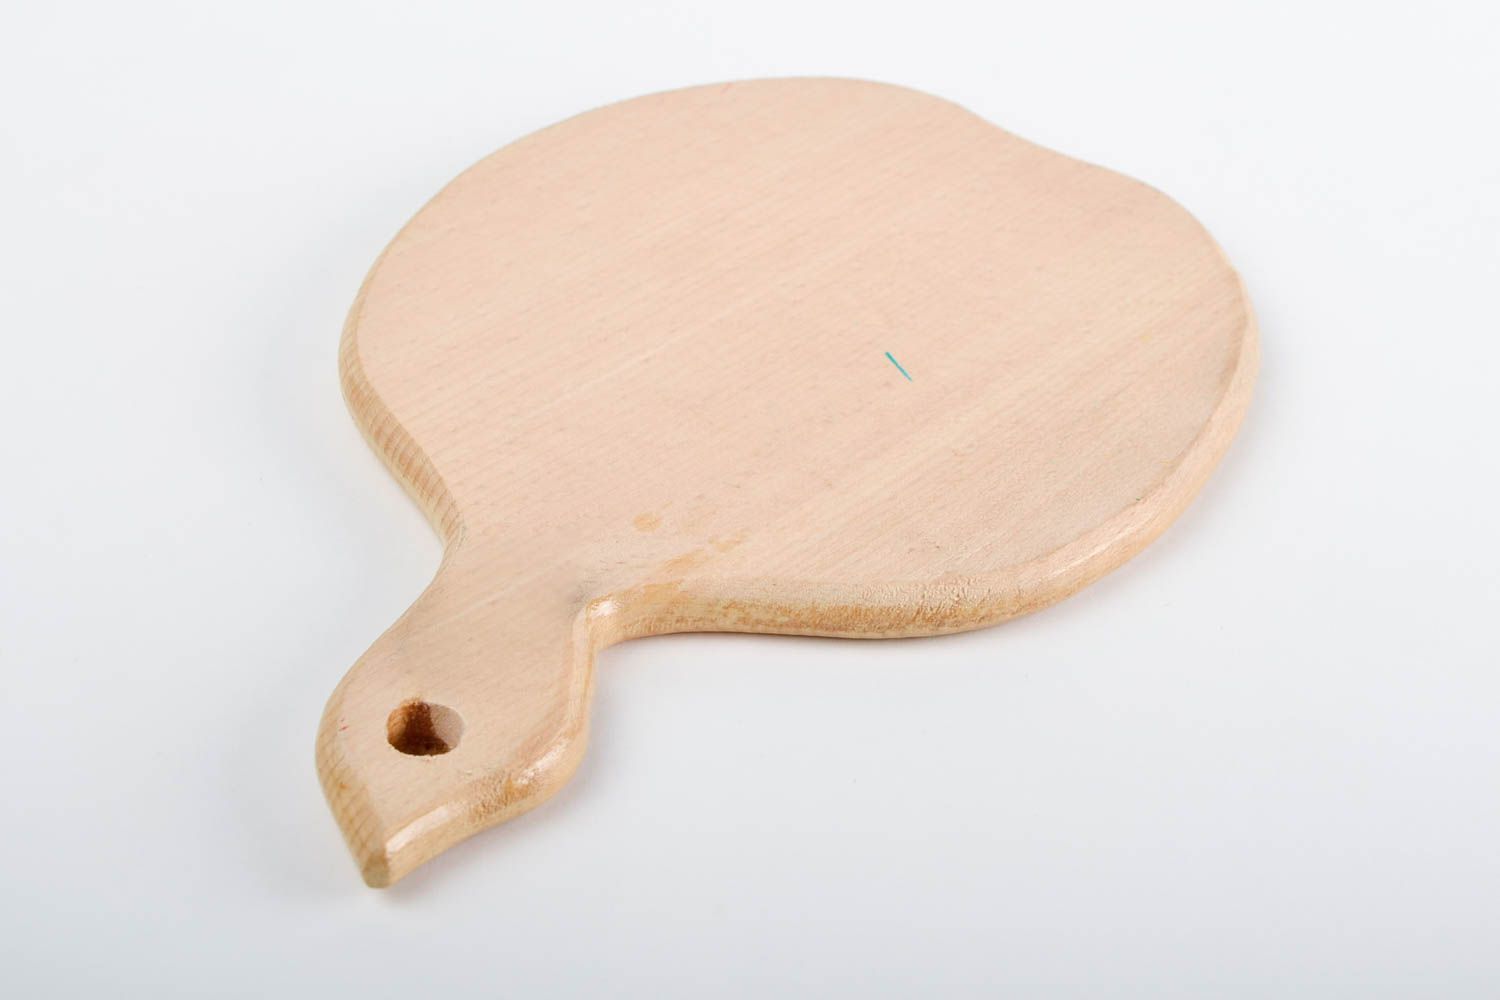 Unusual handmade wooden chopping board cutting board kitchen supplies gift ideas photo 5